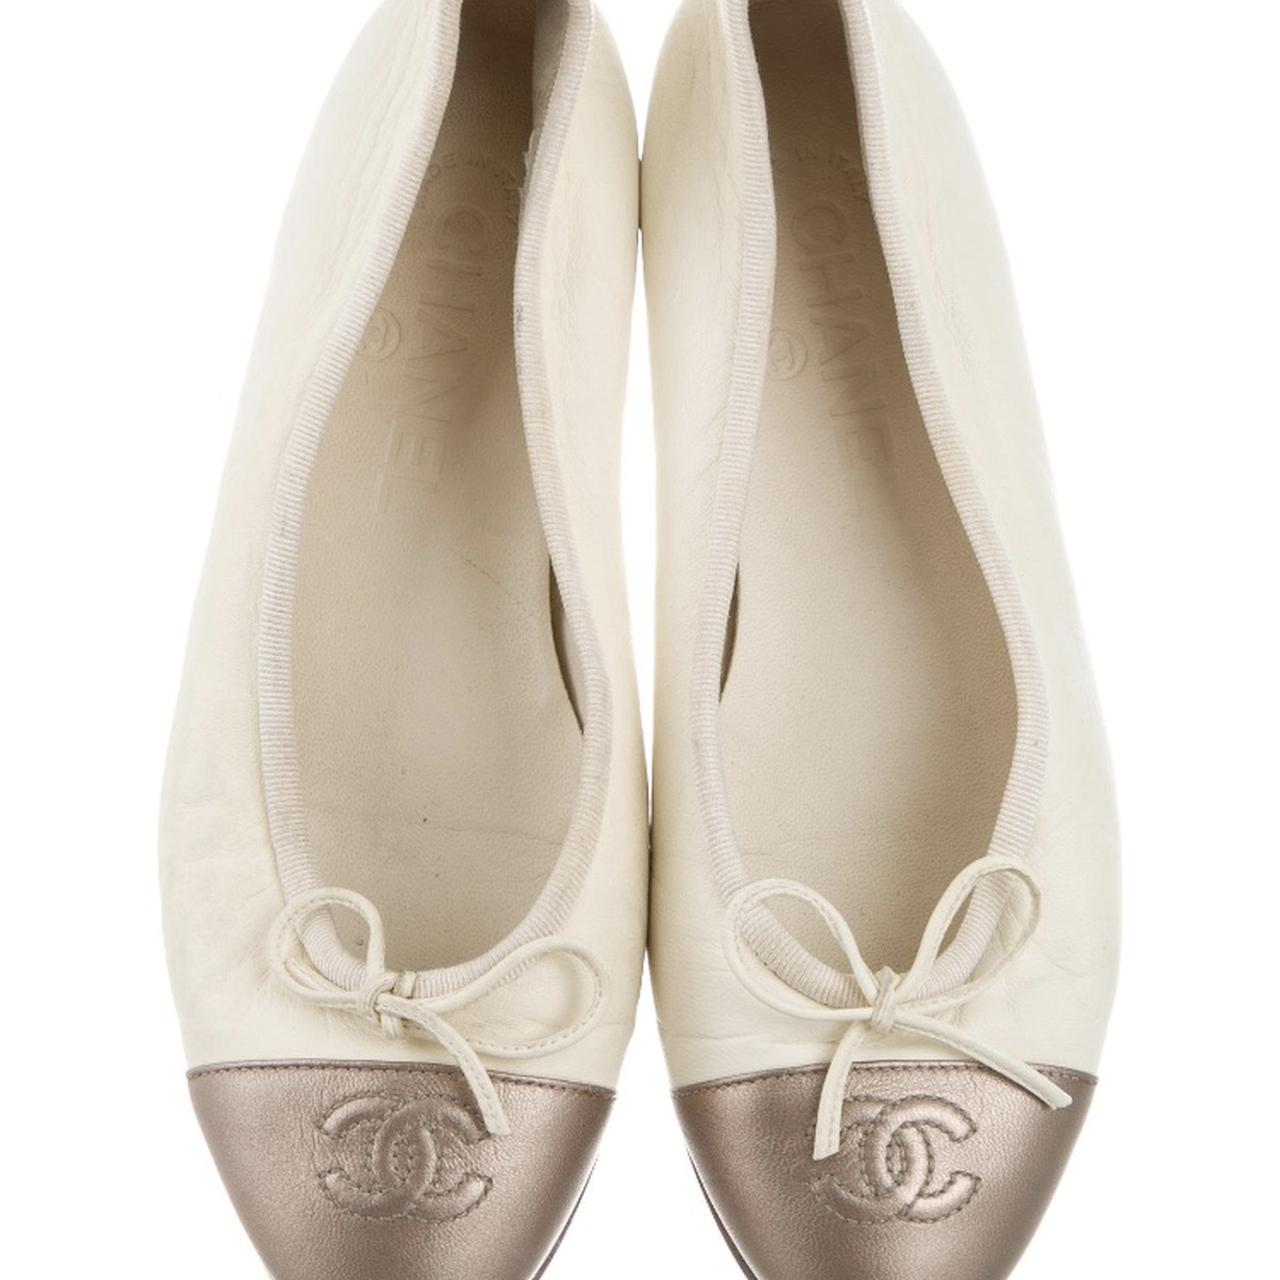 Chanel ballet shoes size - Gem